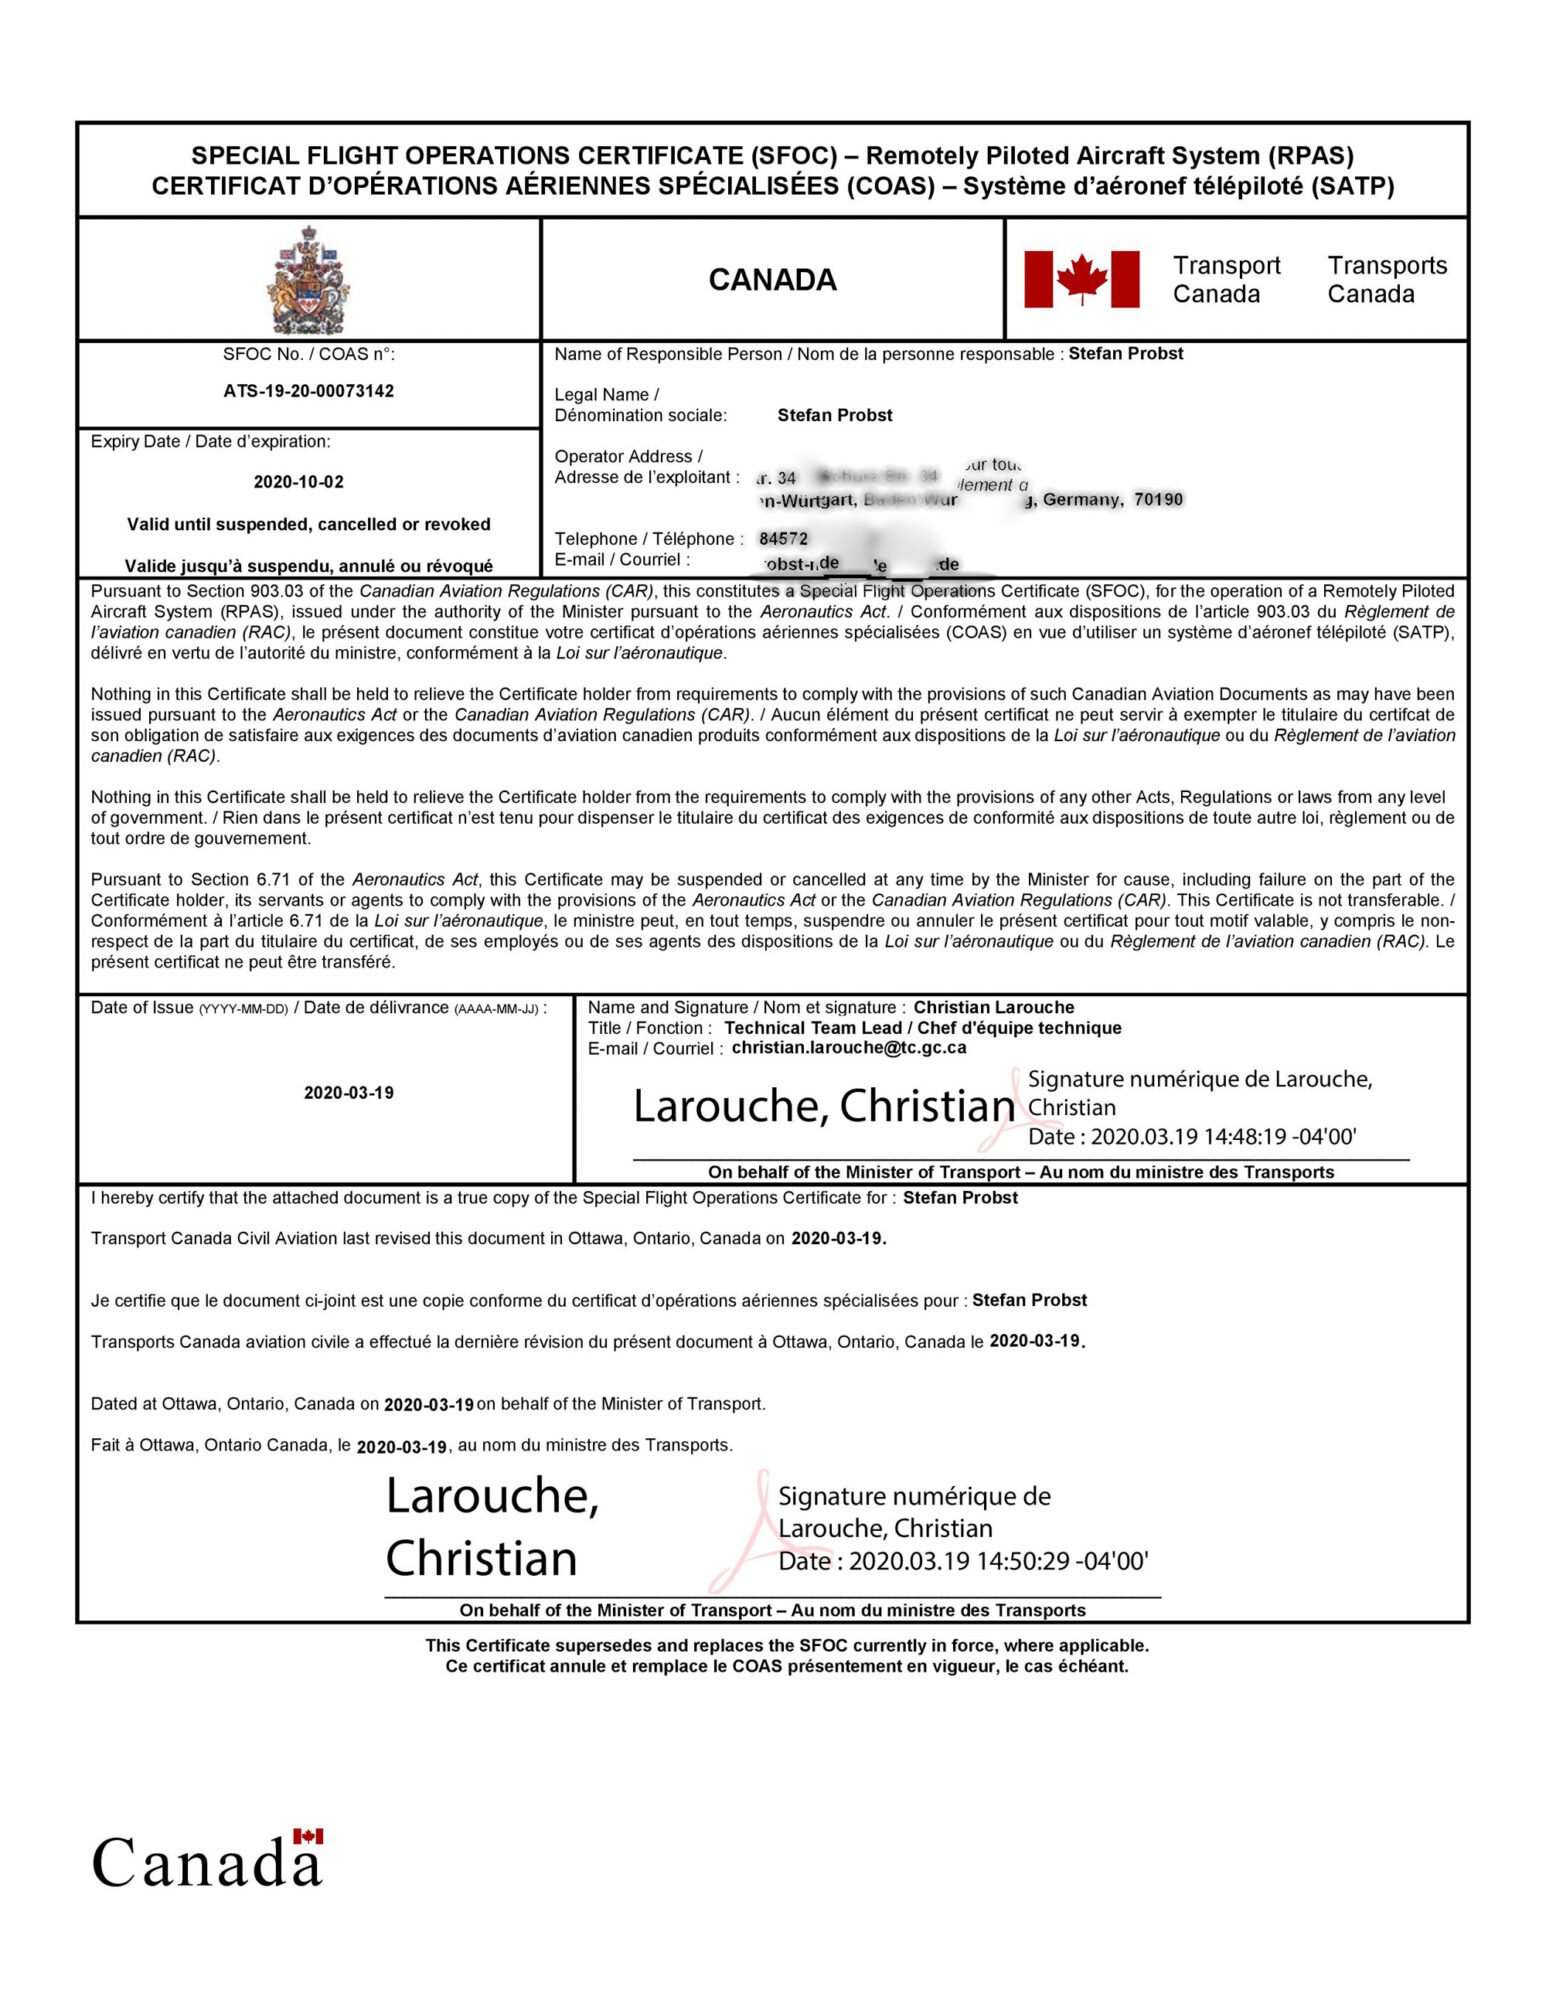 Canada SFOC (Special Flight Operations Certificate)